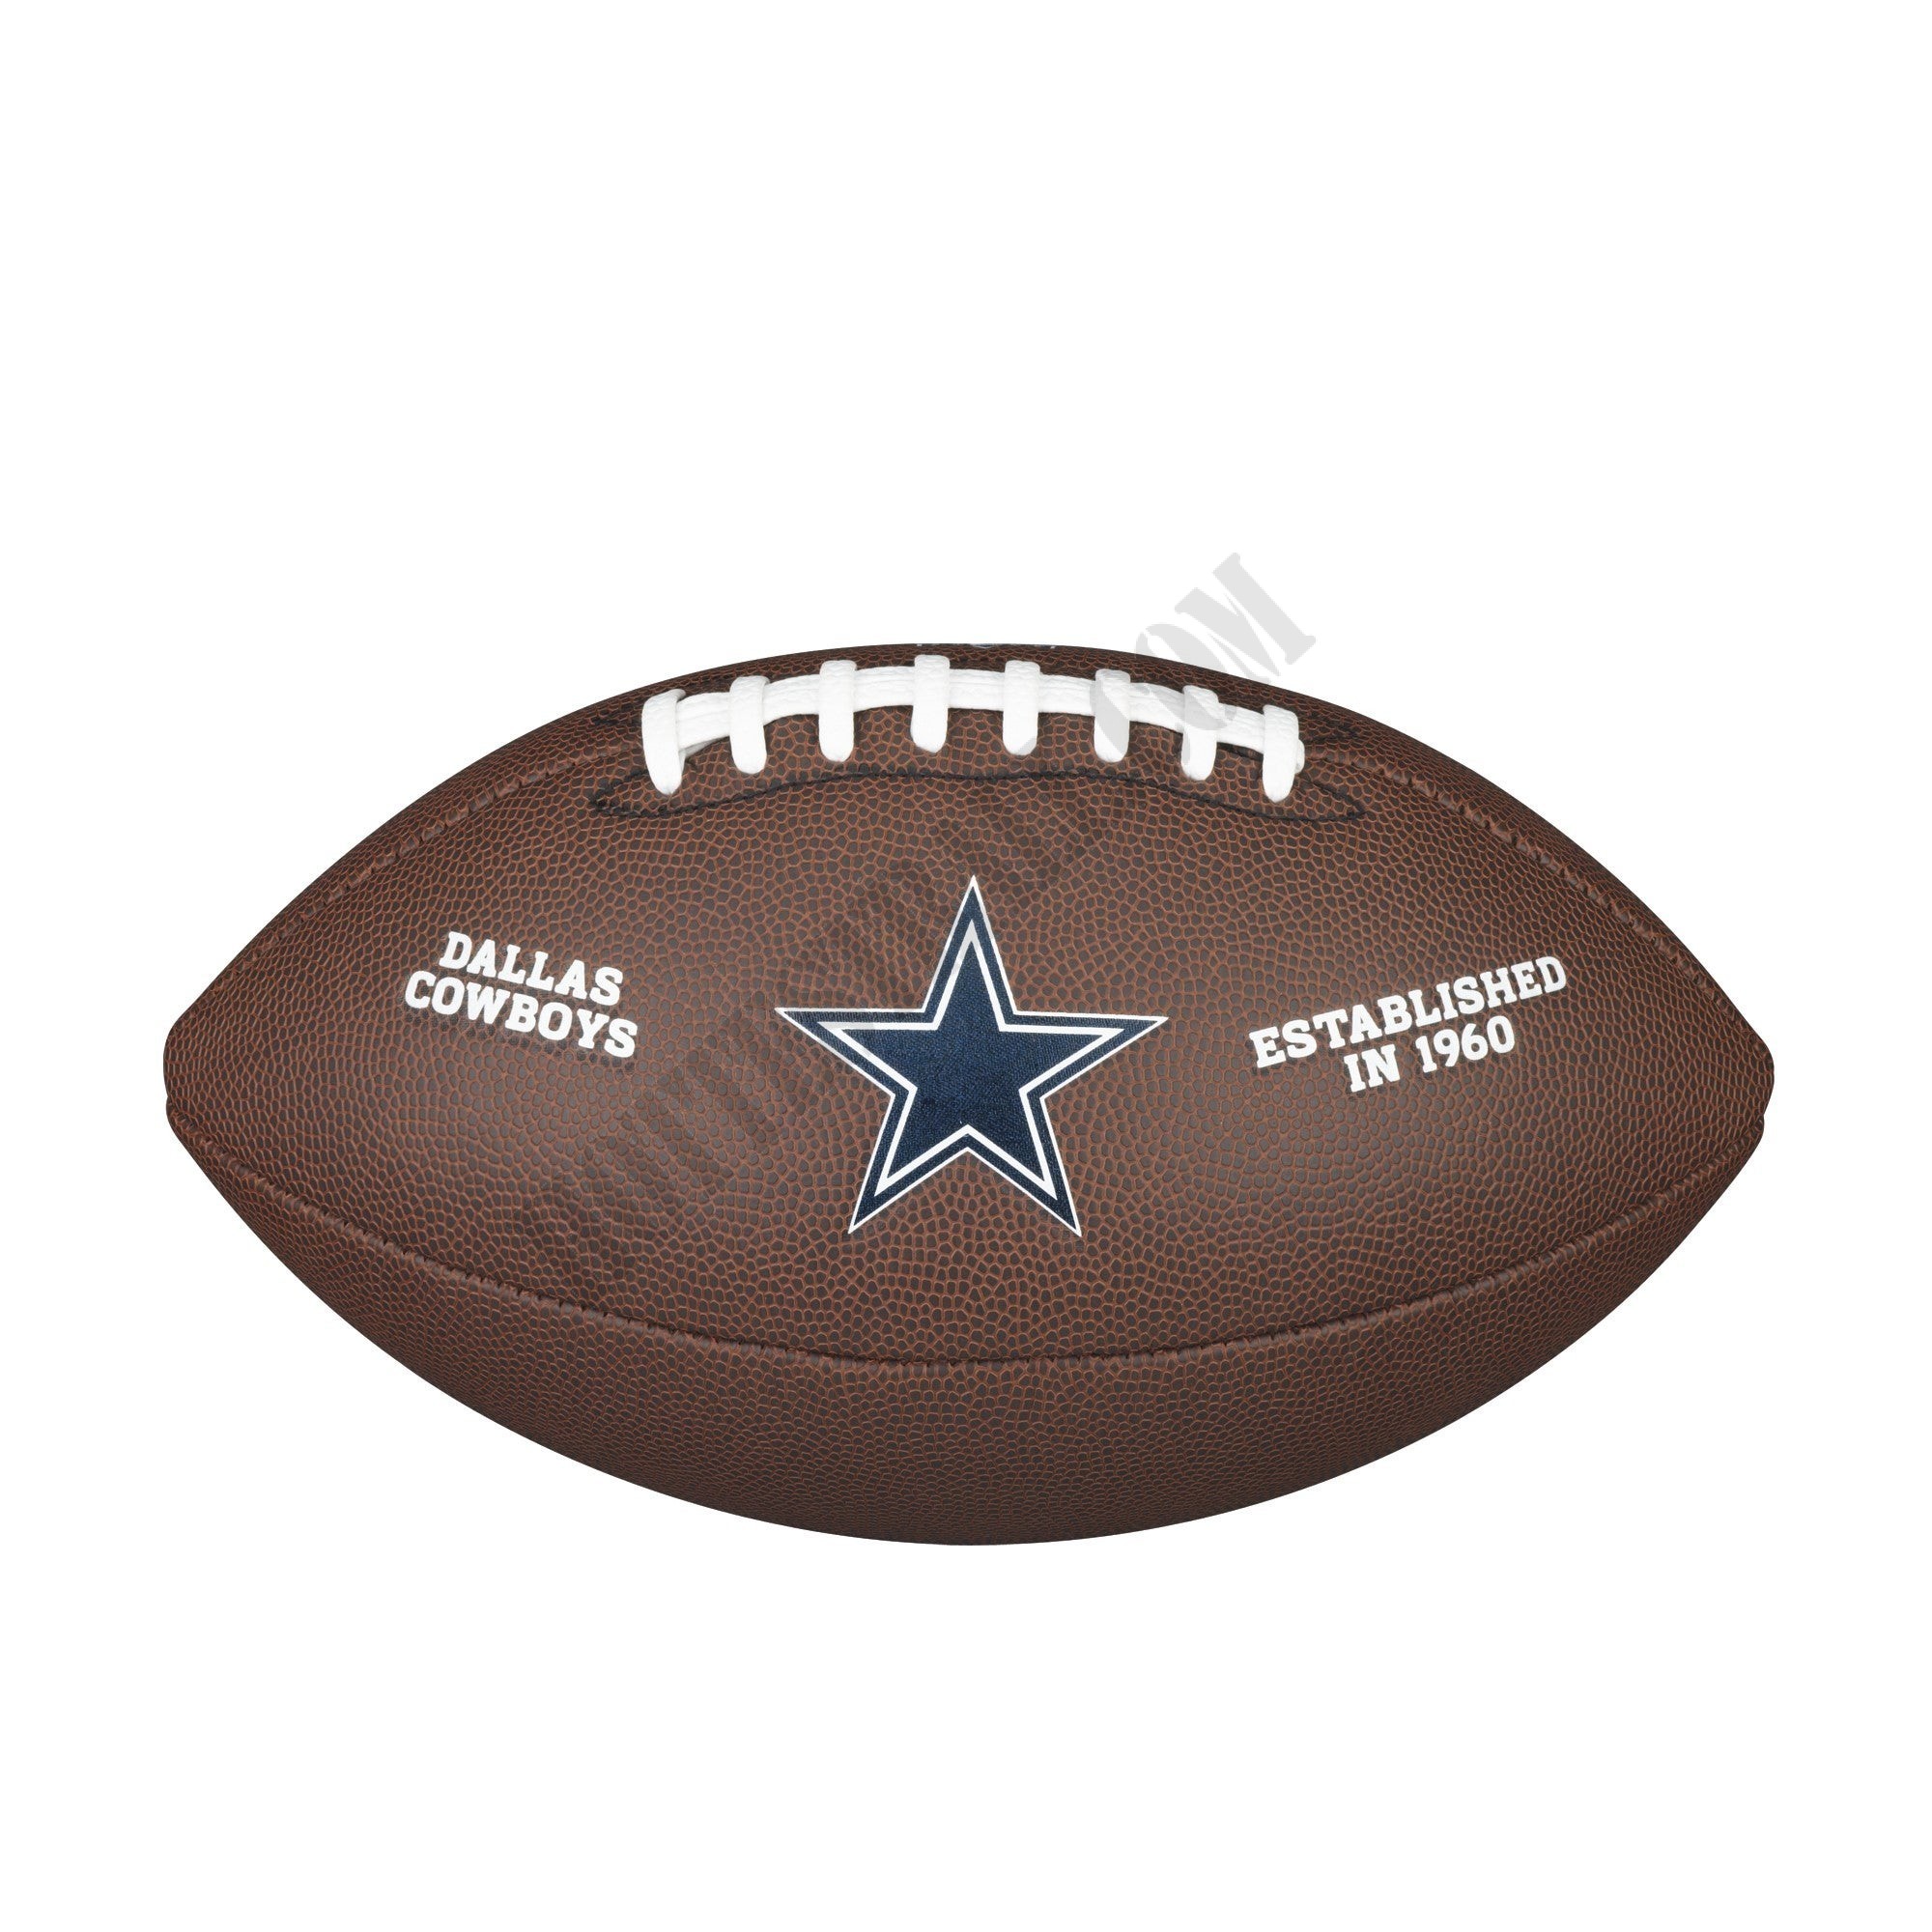 NFL Backyard Legend Football - Dallas Cowboys ● Wilson Promotions - NFL Backyard Legend Football - Dallas Cowboys ● Wilson Promotions